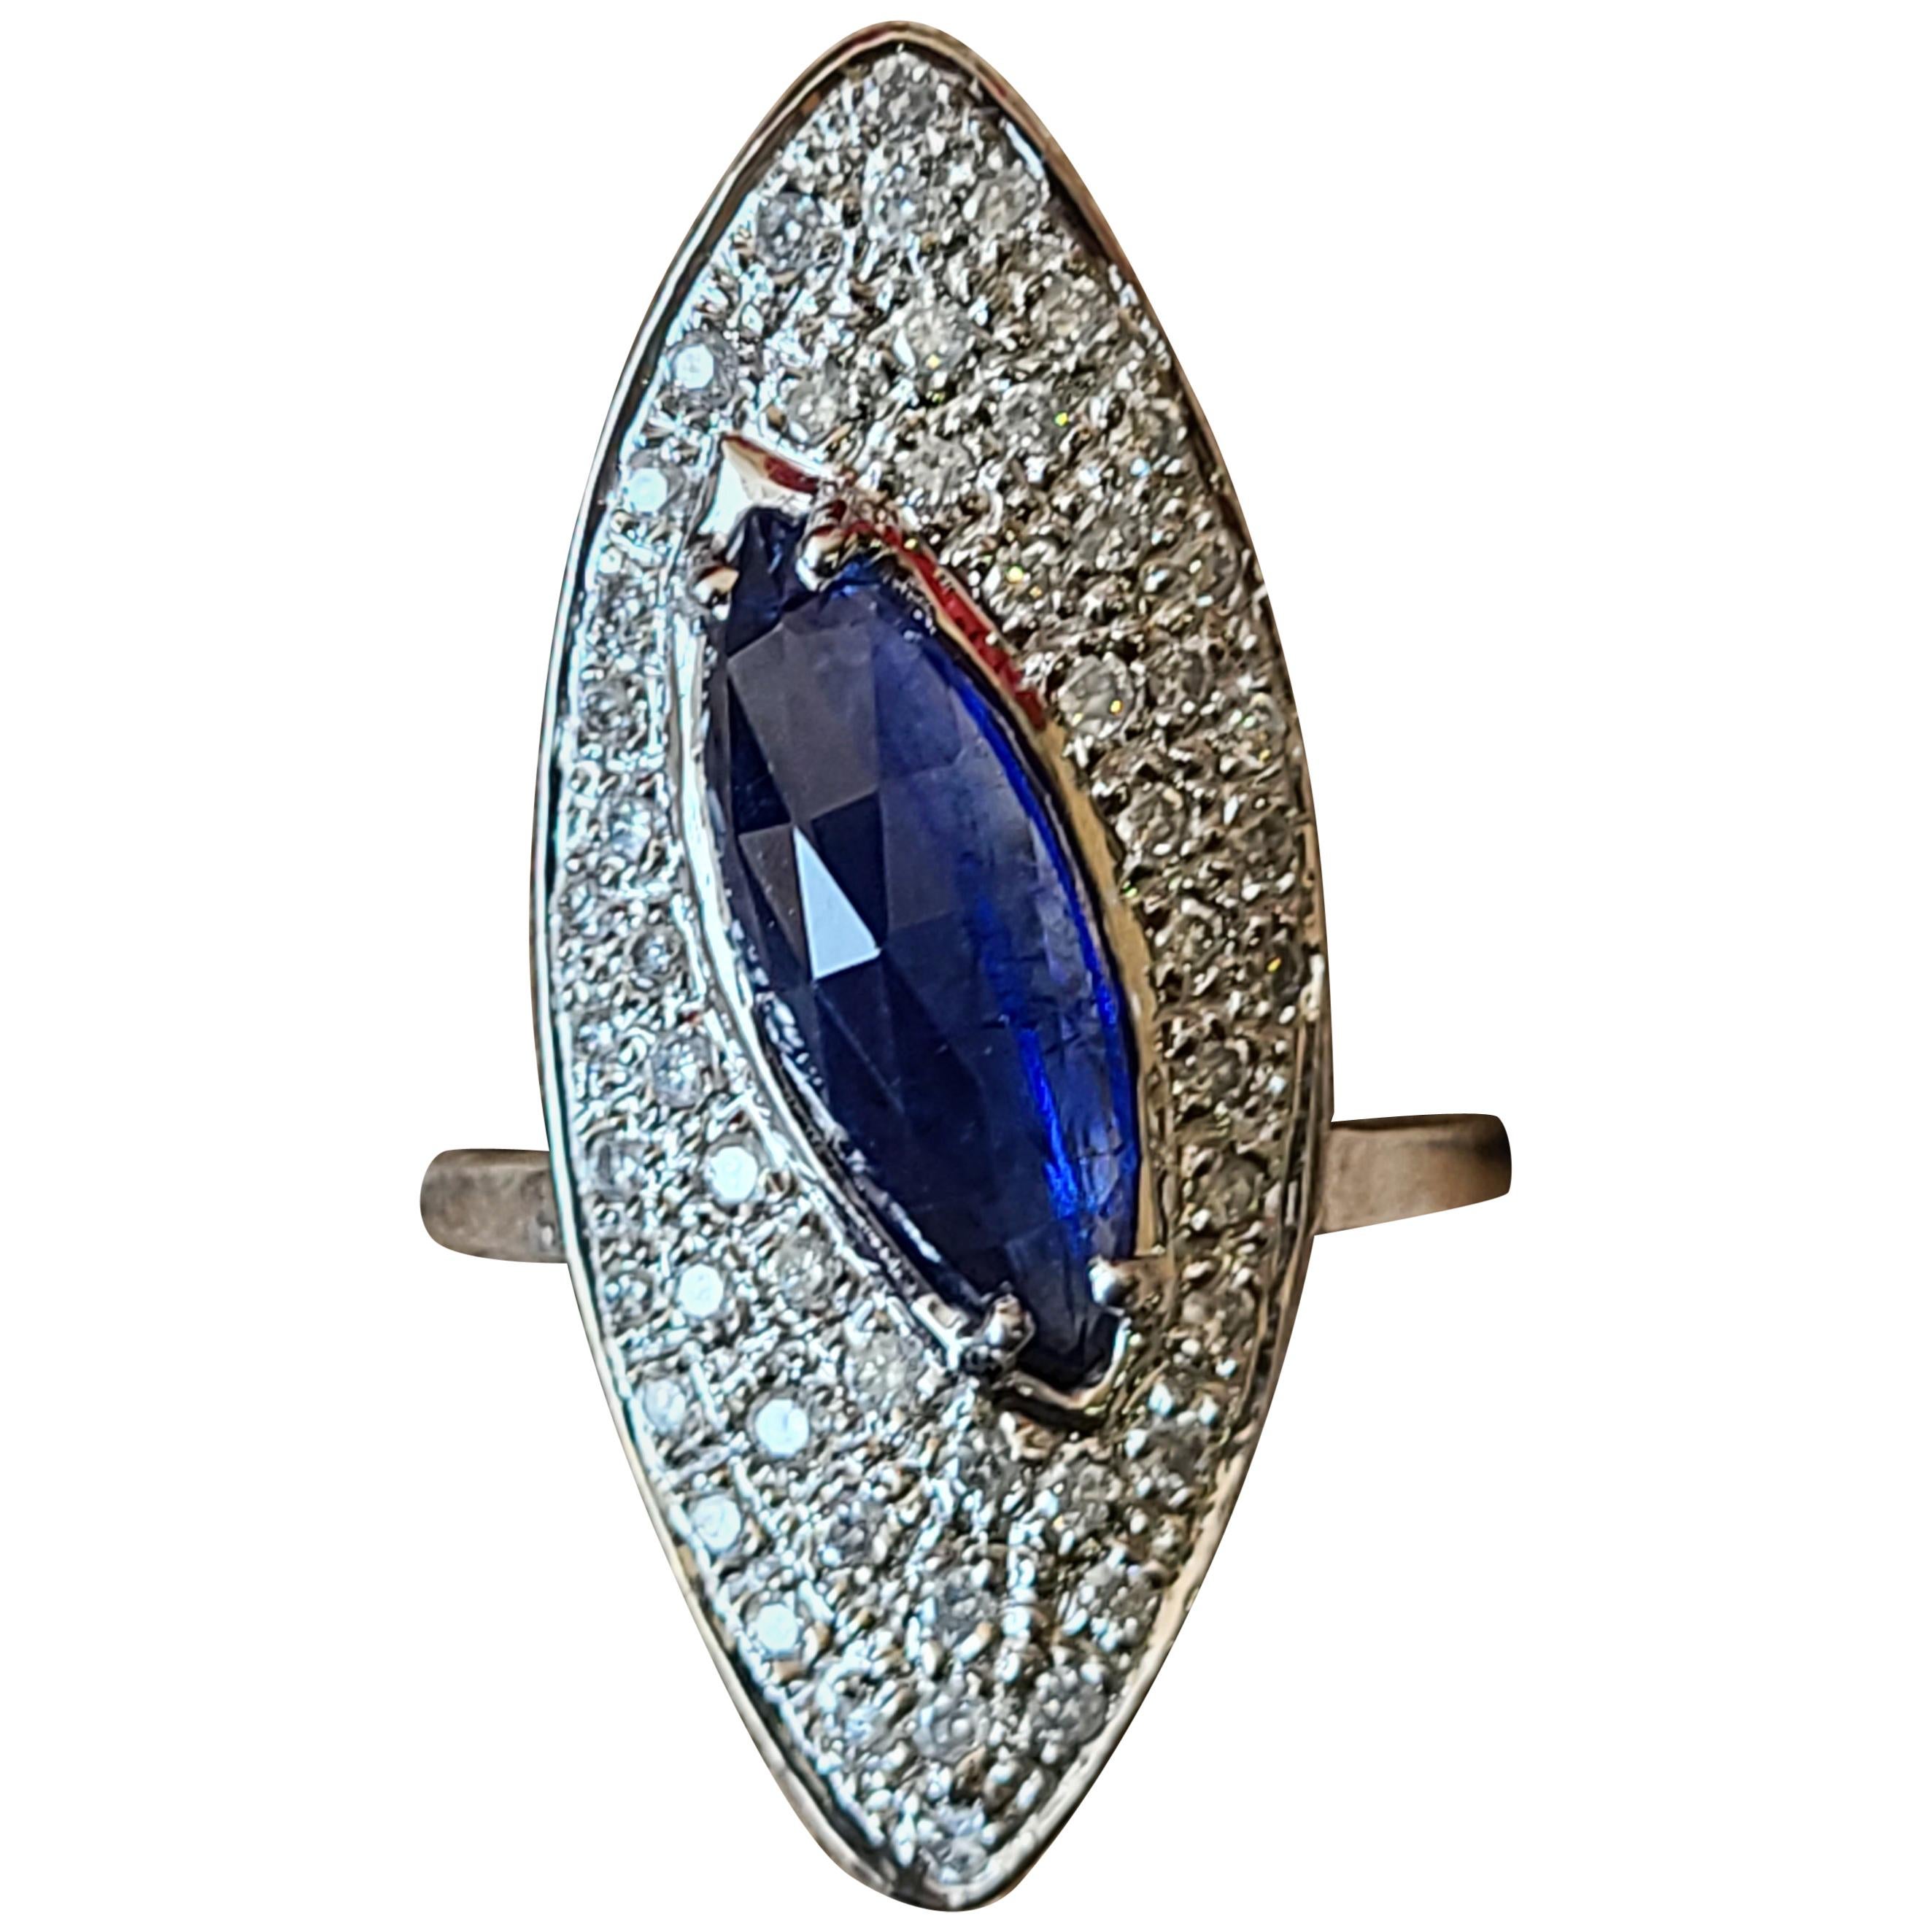 2.92 Carat Blue Sapphire Ring Set in 18 Karat Gold with Diamonds